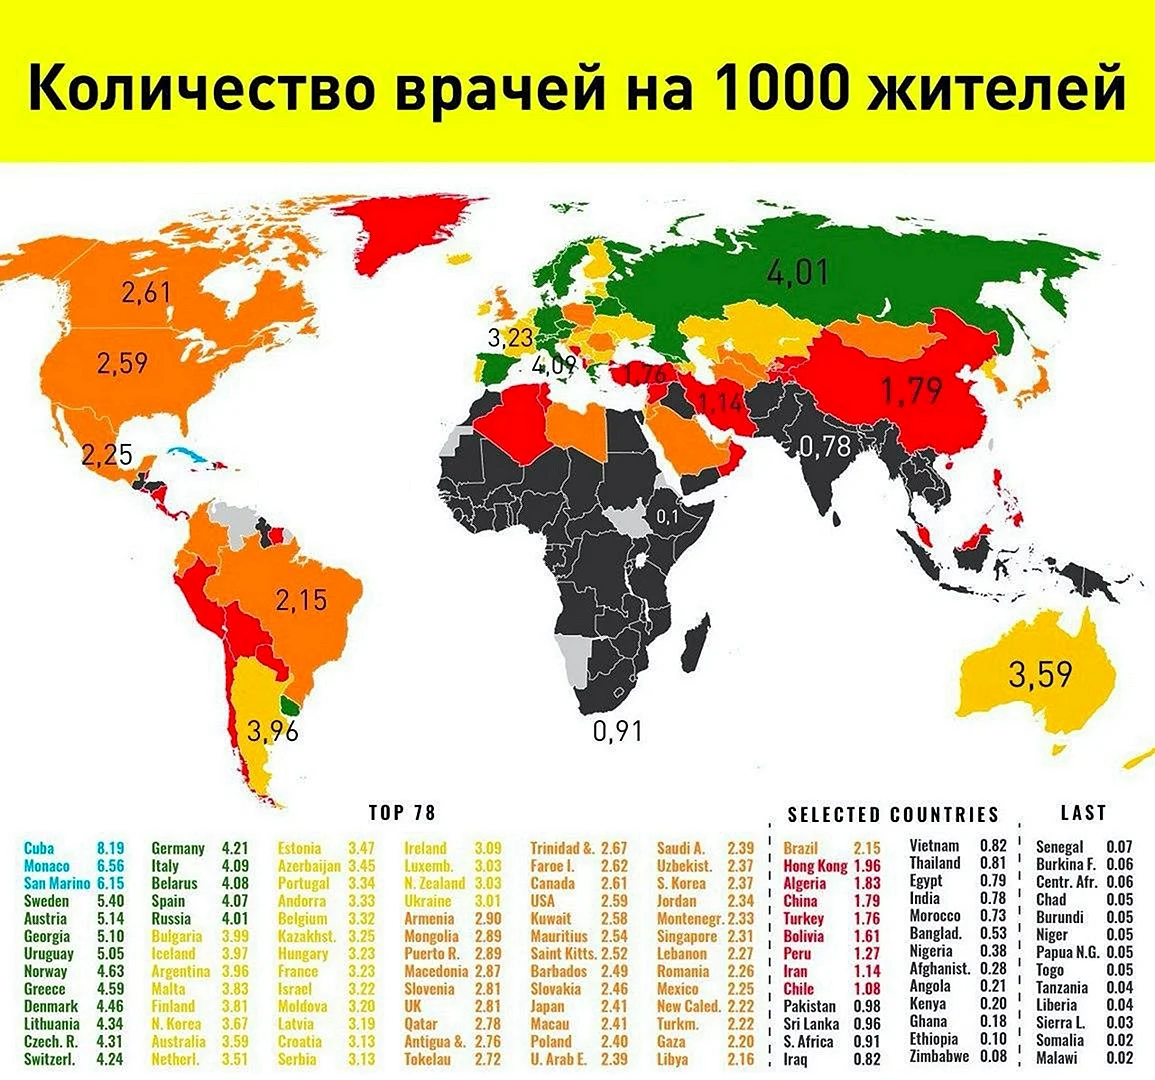 Количество врачей на 1000 человек по странам